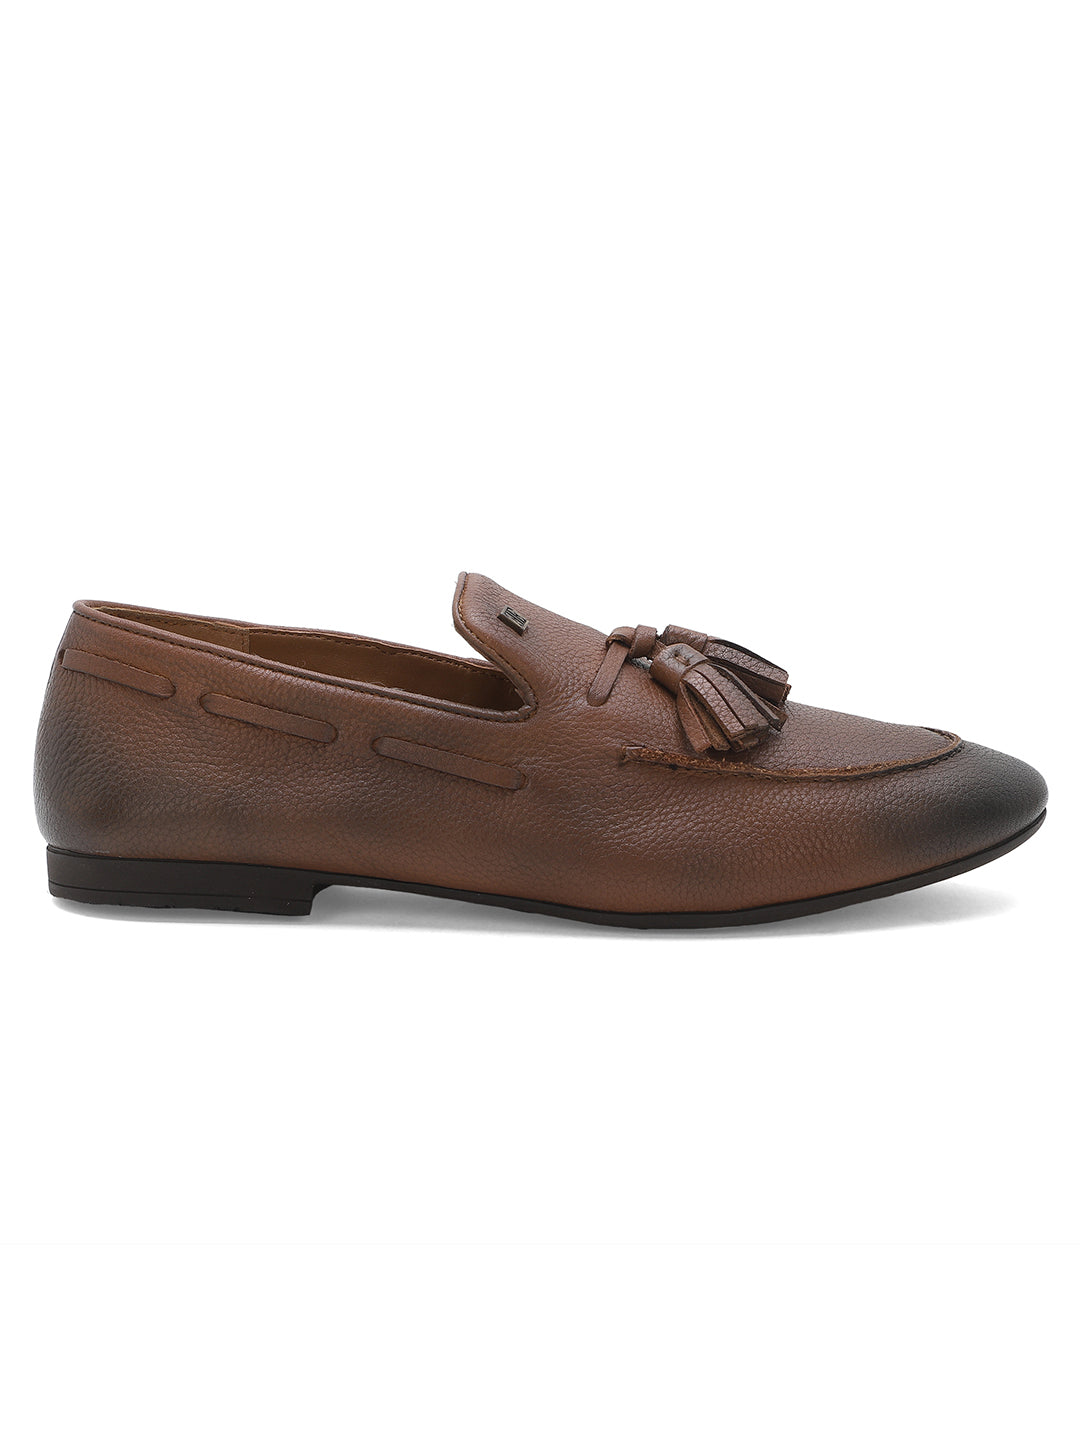 Ezok Men Brown Leather Semi Formal Shoes